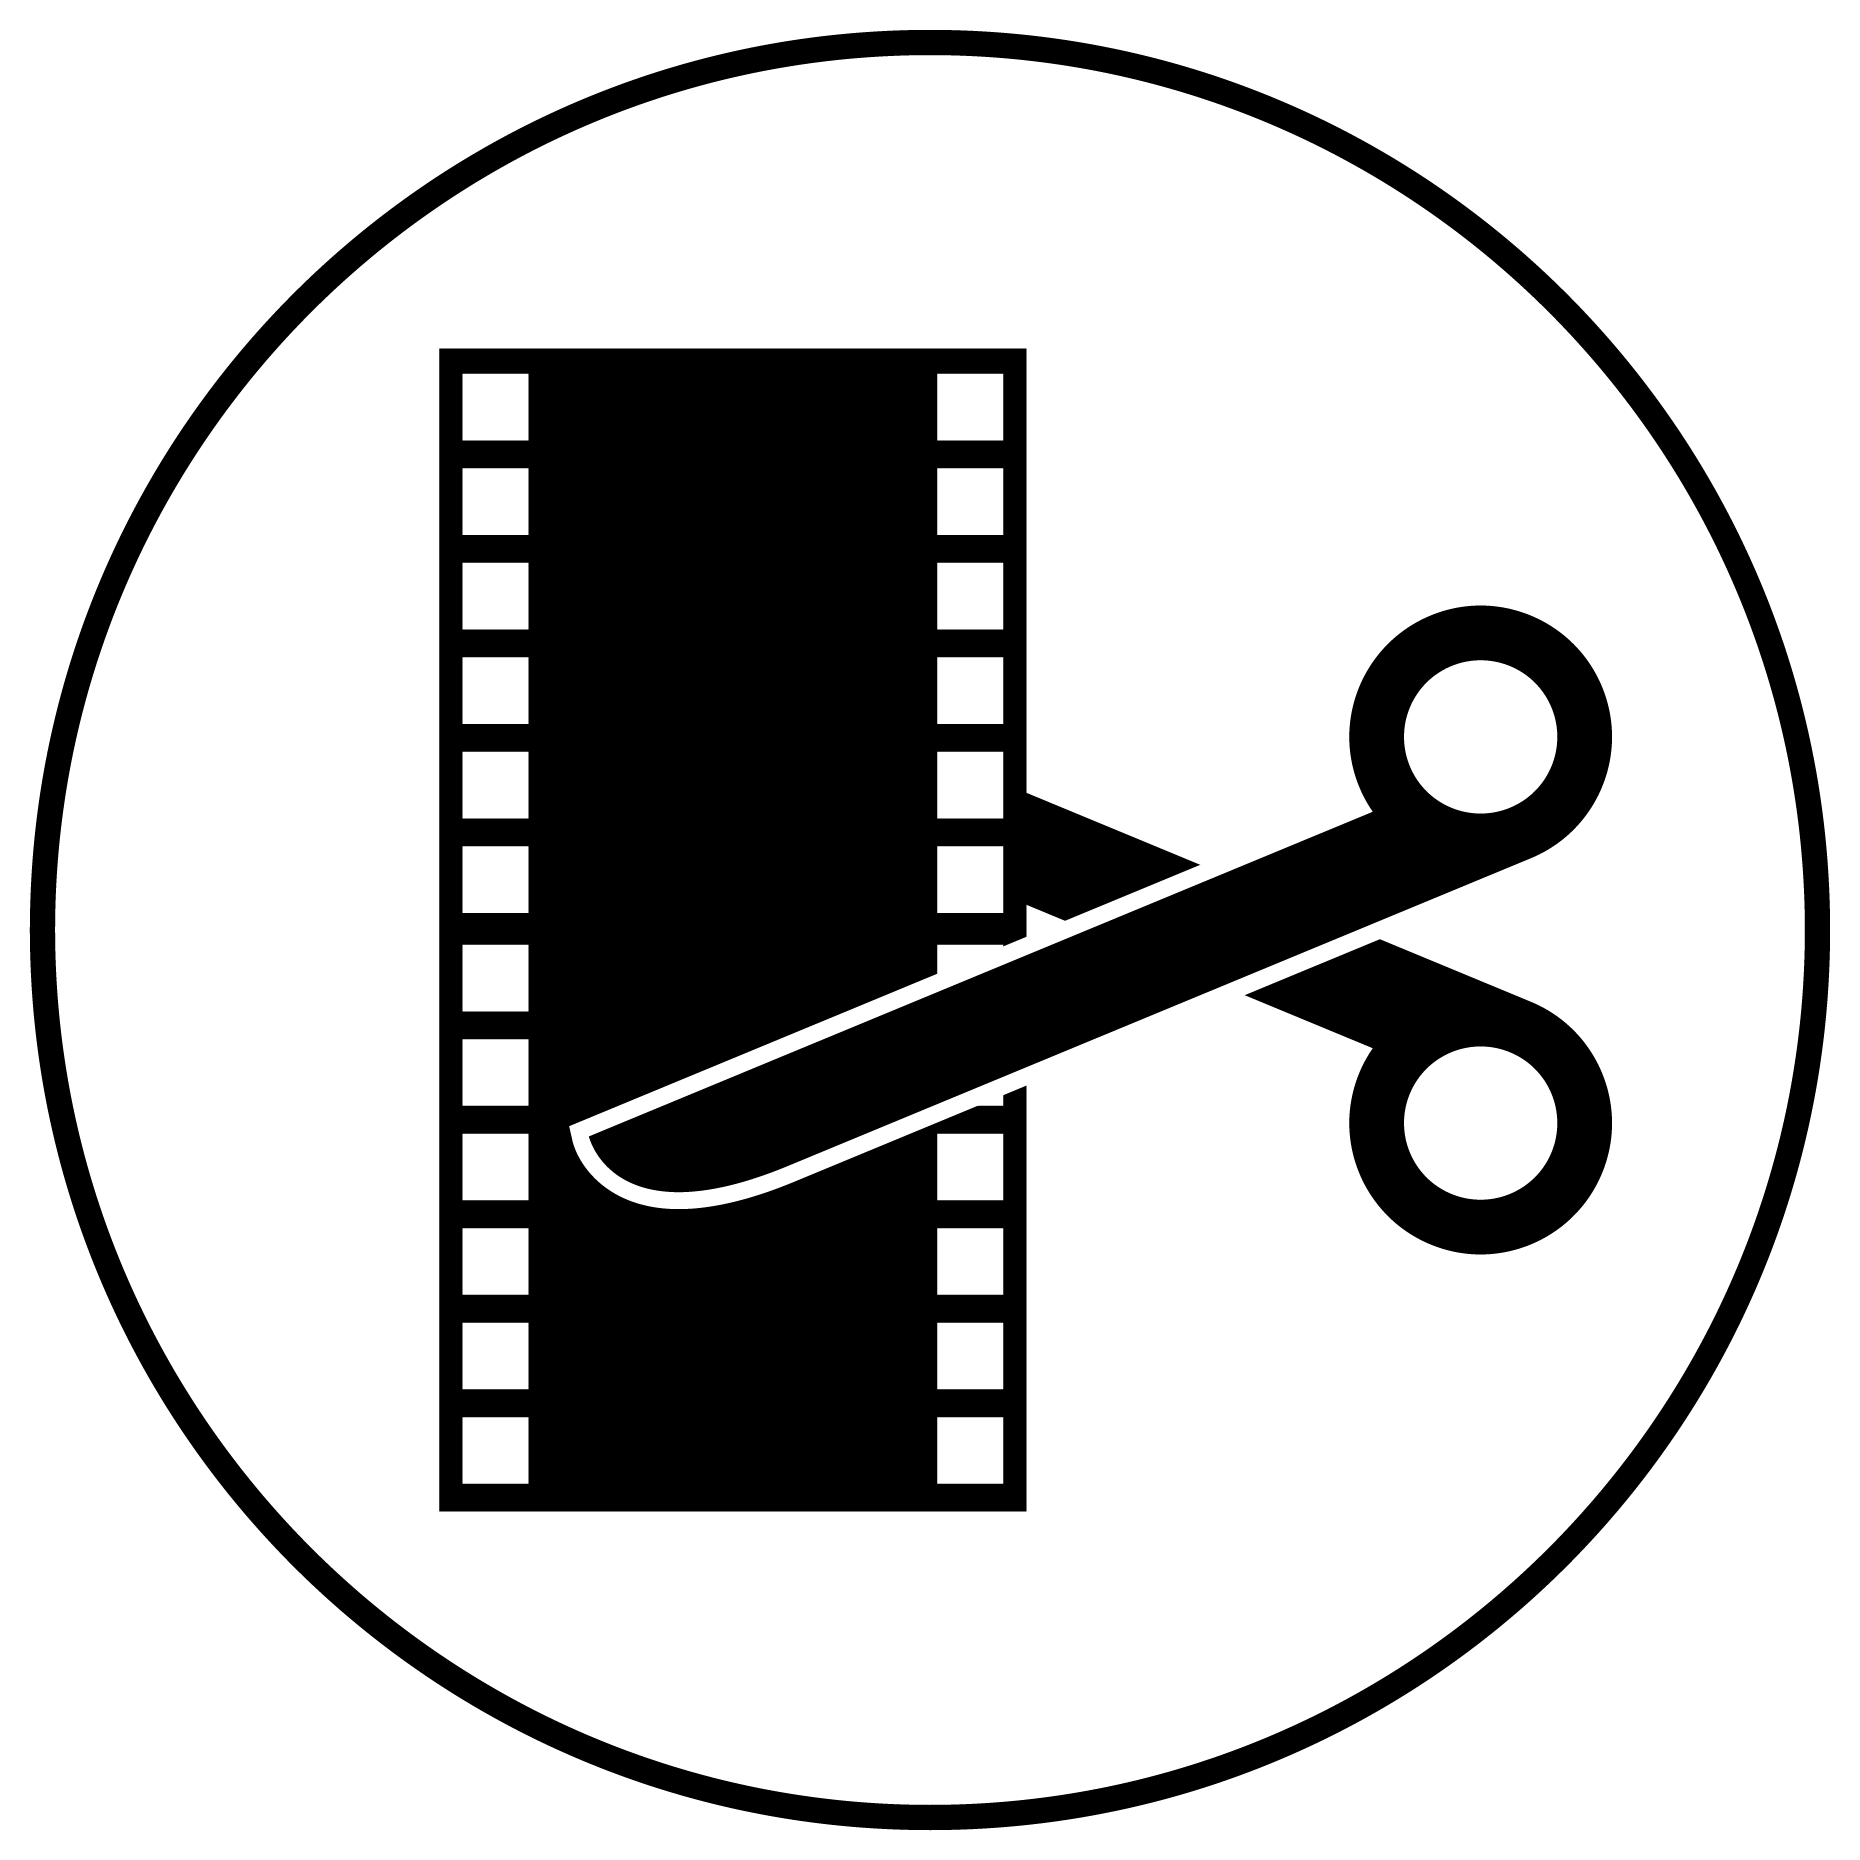 video clipart video editor